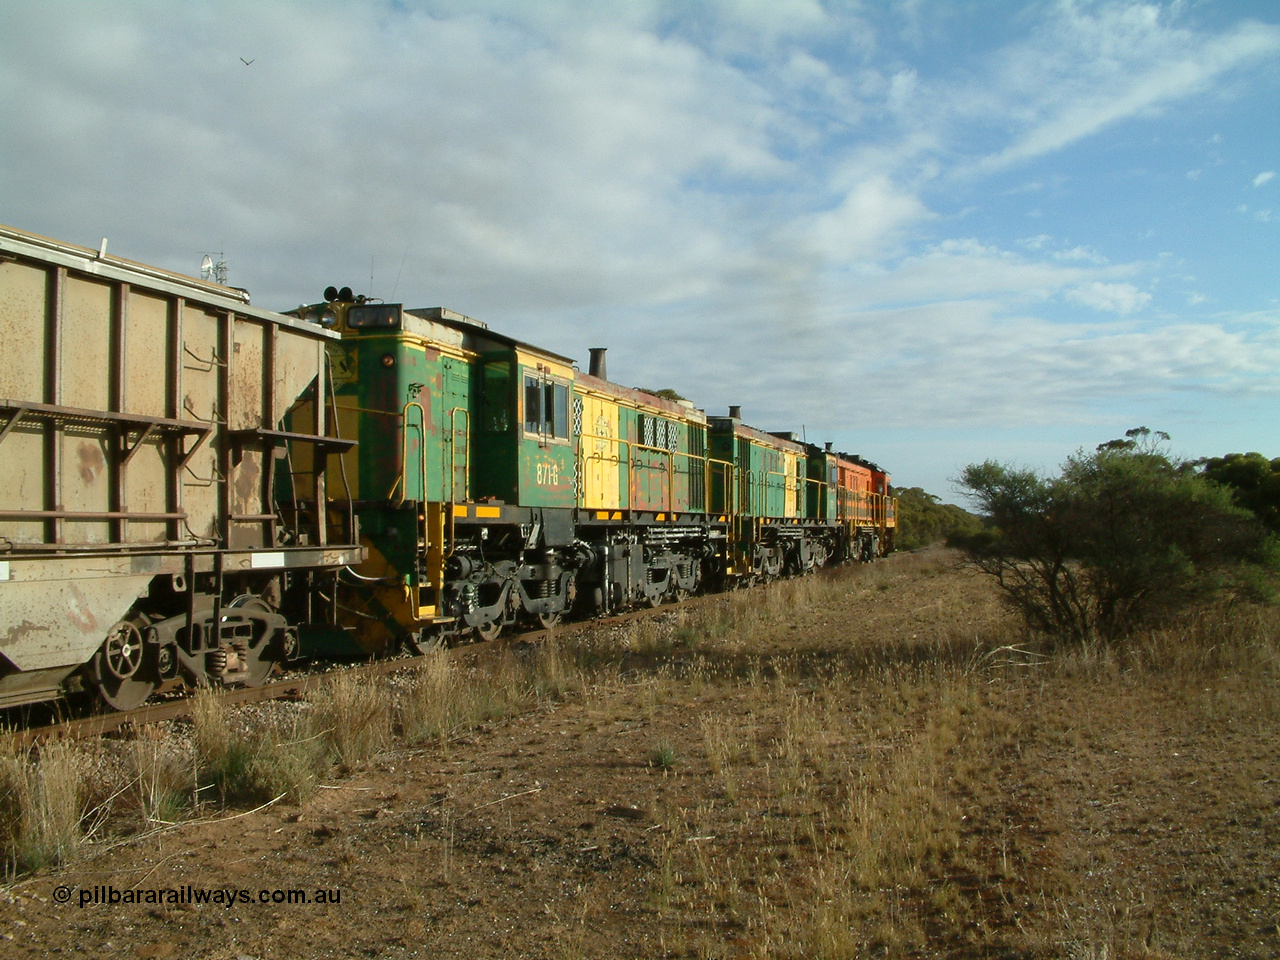 030409 081031
Warramboo, empty grain train powers away towards Kyancutta behind DA class DA 7 leading two 830 class units 872 and 871.
Keywords: 830-class;871;G3422-1;AE-Goodwin;ALCo;DL531;